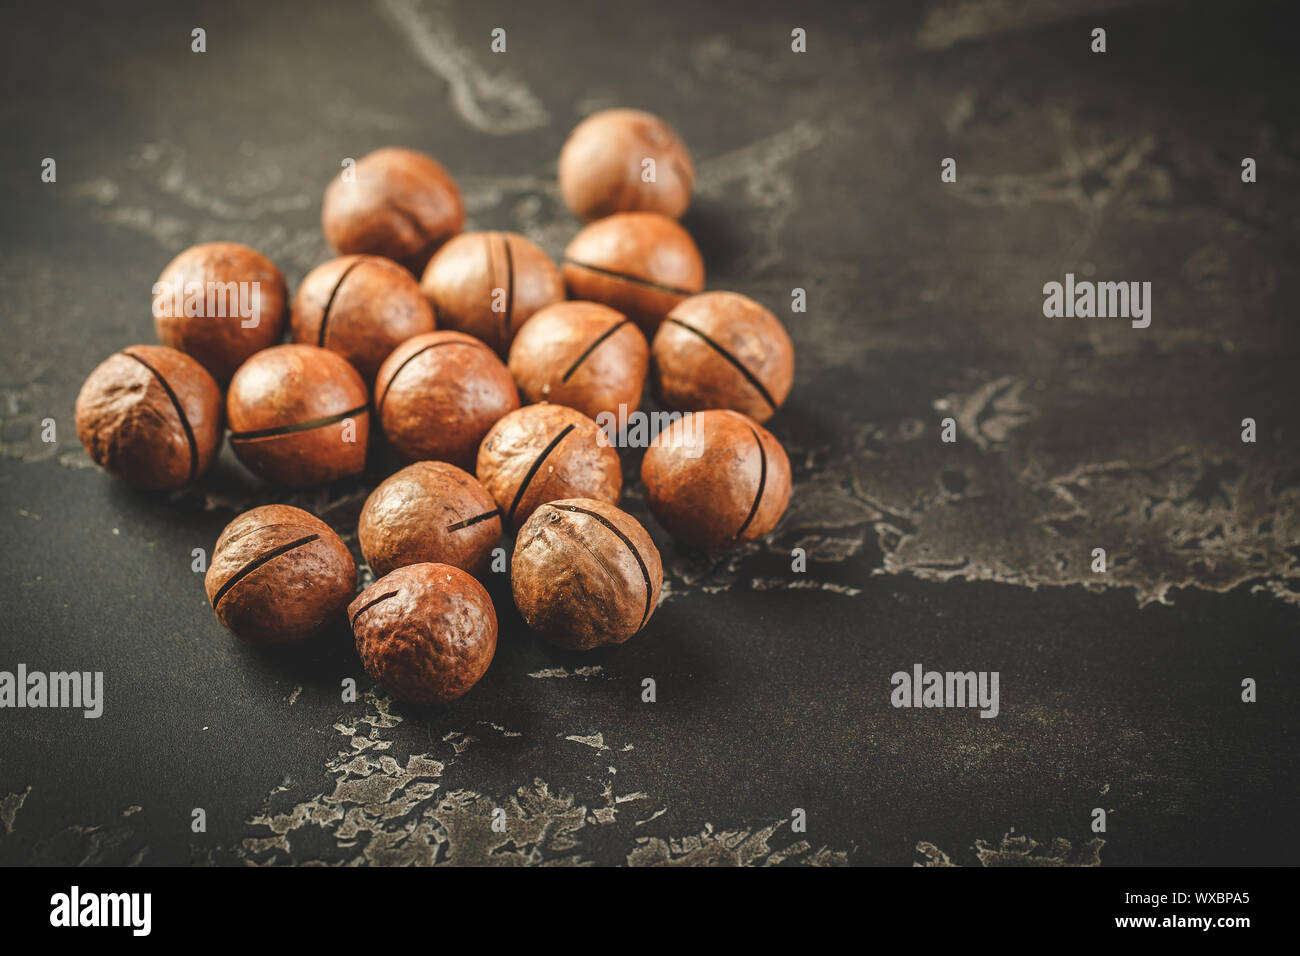 Macadamia nuts on wooden table Stock Photo